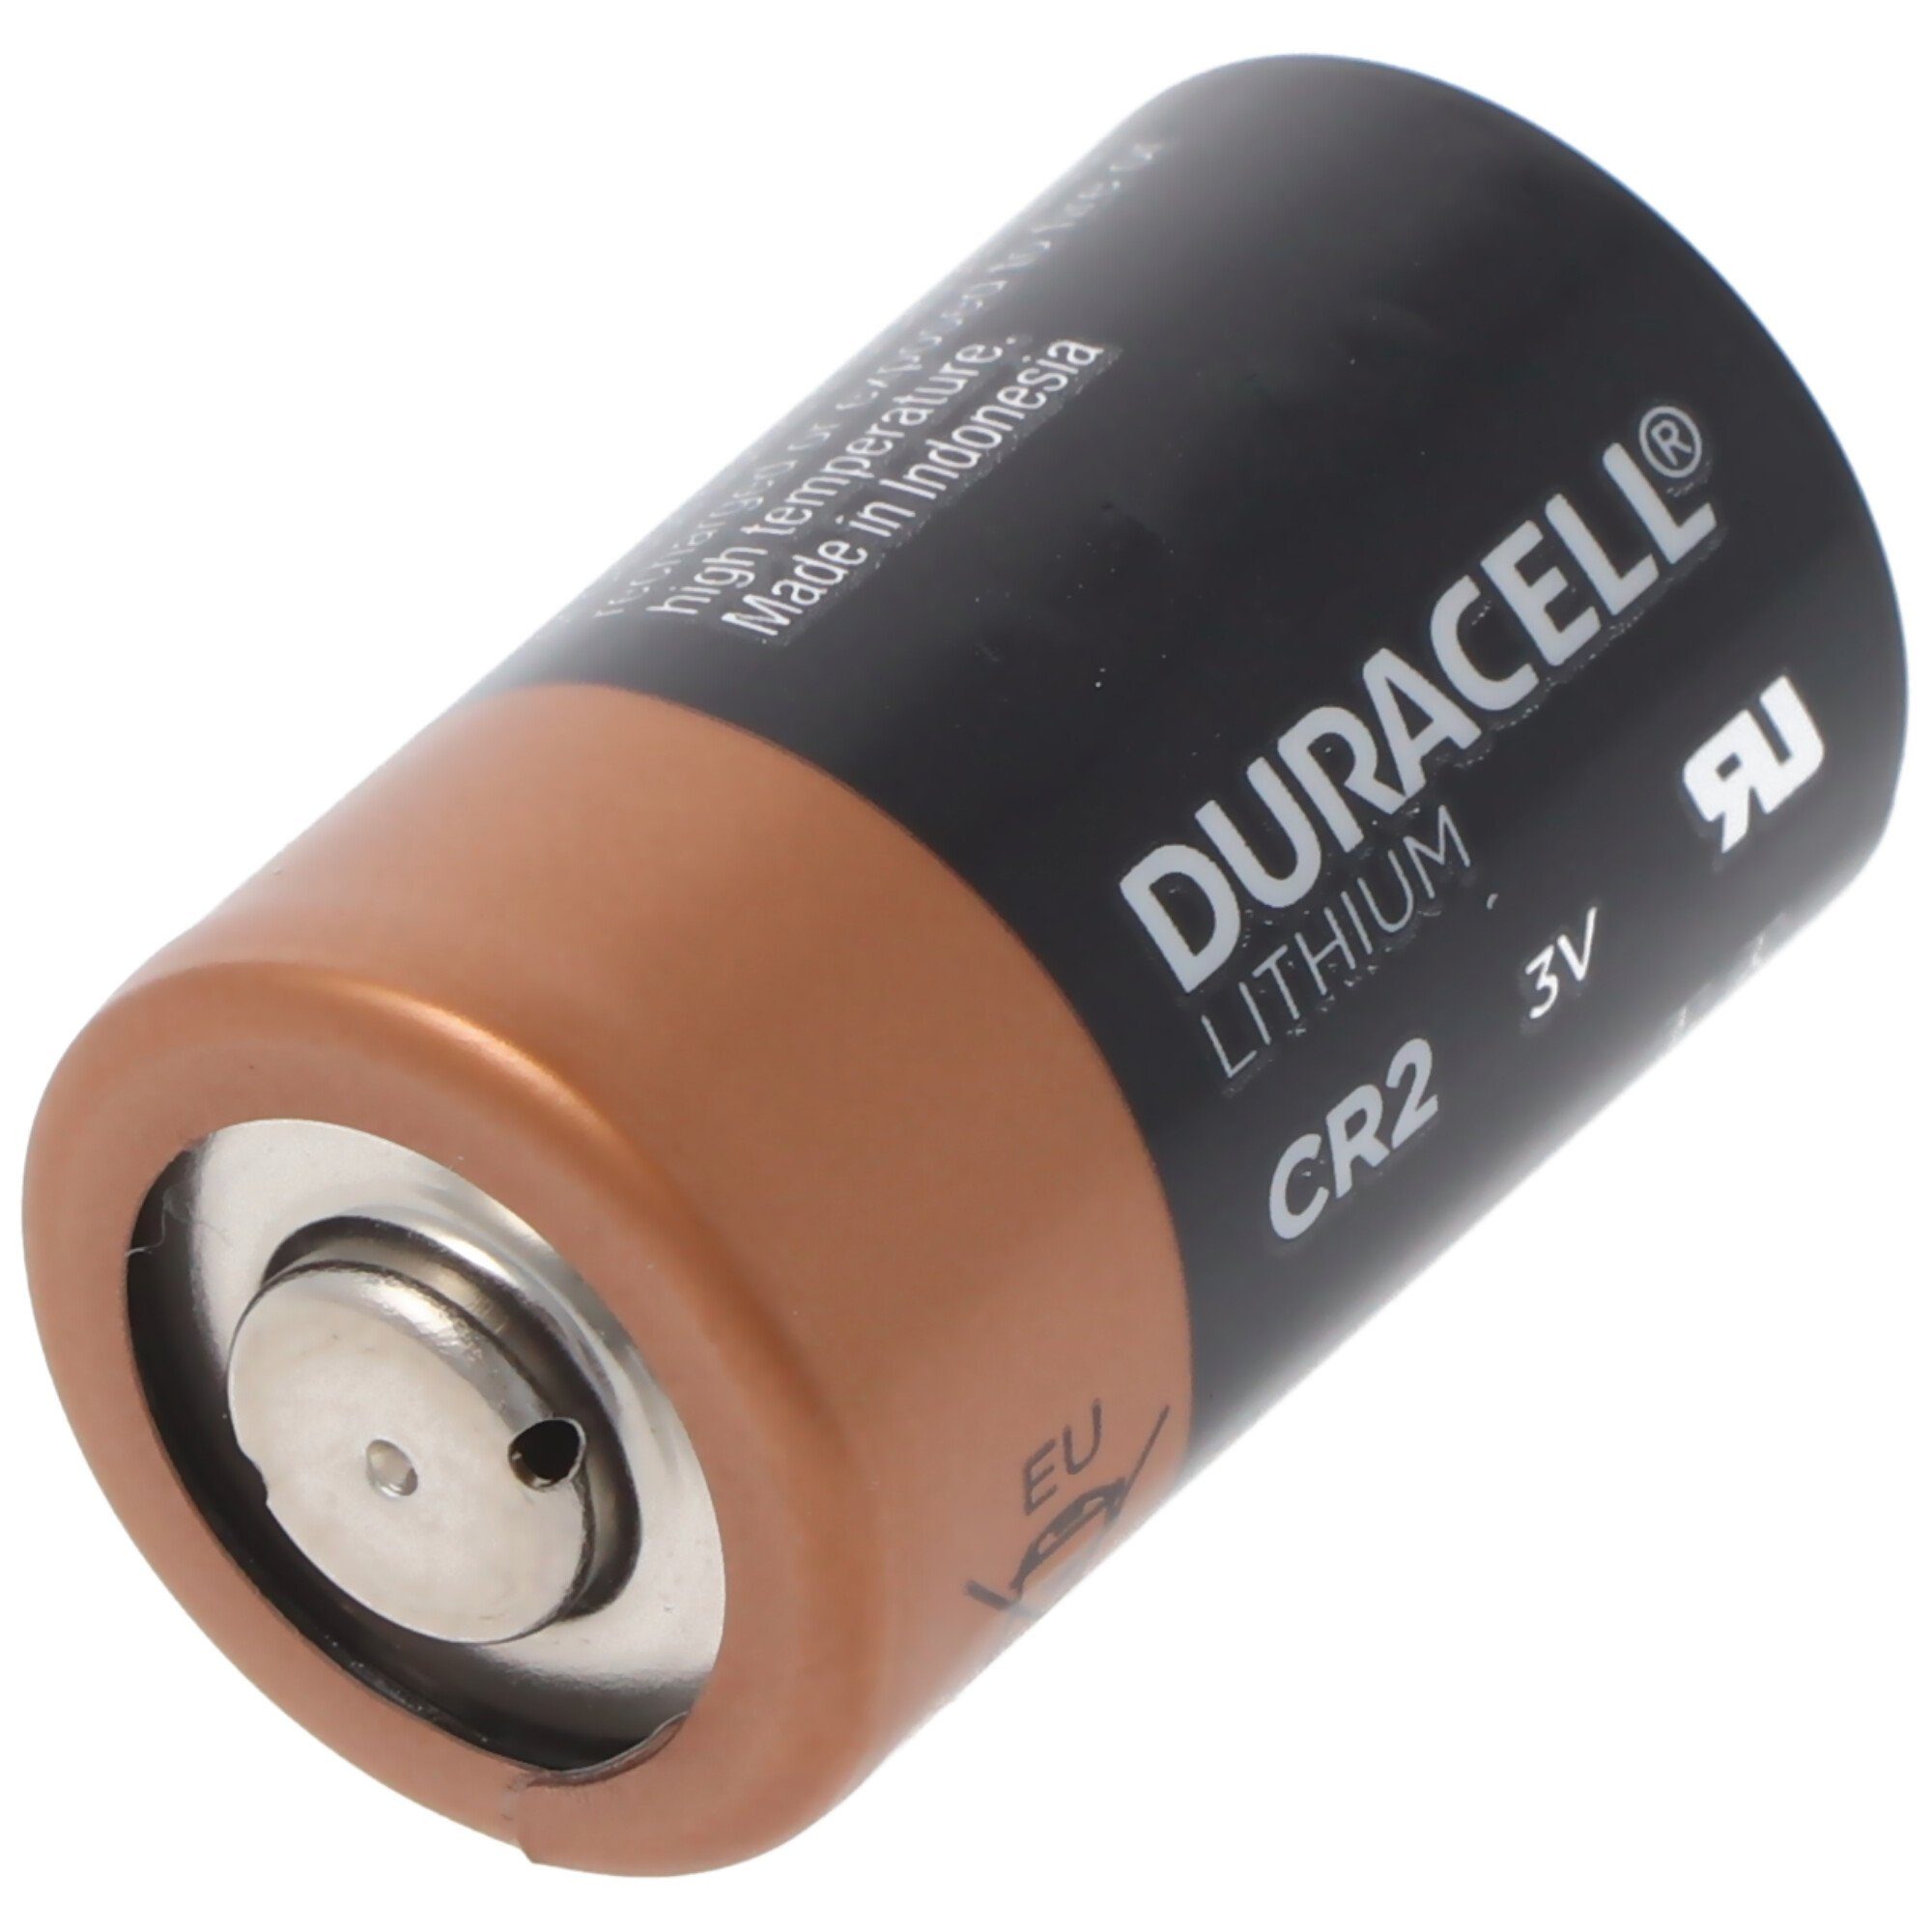 CR15H270 Photobatterie Duracell Lithium 900mAh CR2 Fotobatterie 3V 10x Duracell max.